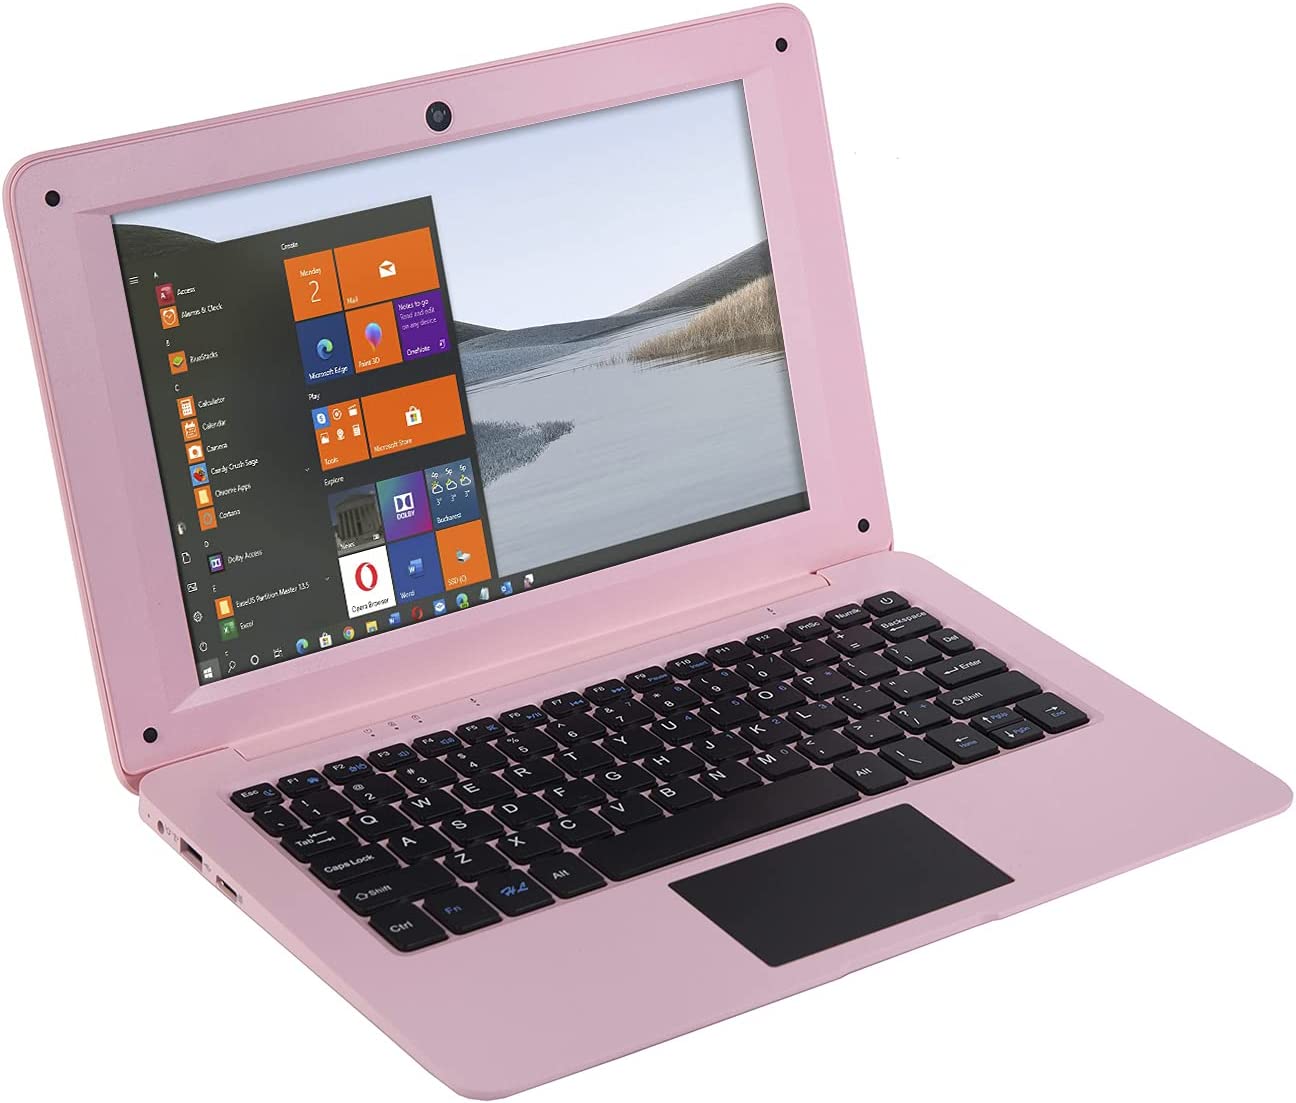 Goldengulf Windows 10 Portable Computer Laptop Mini [...]